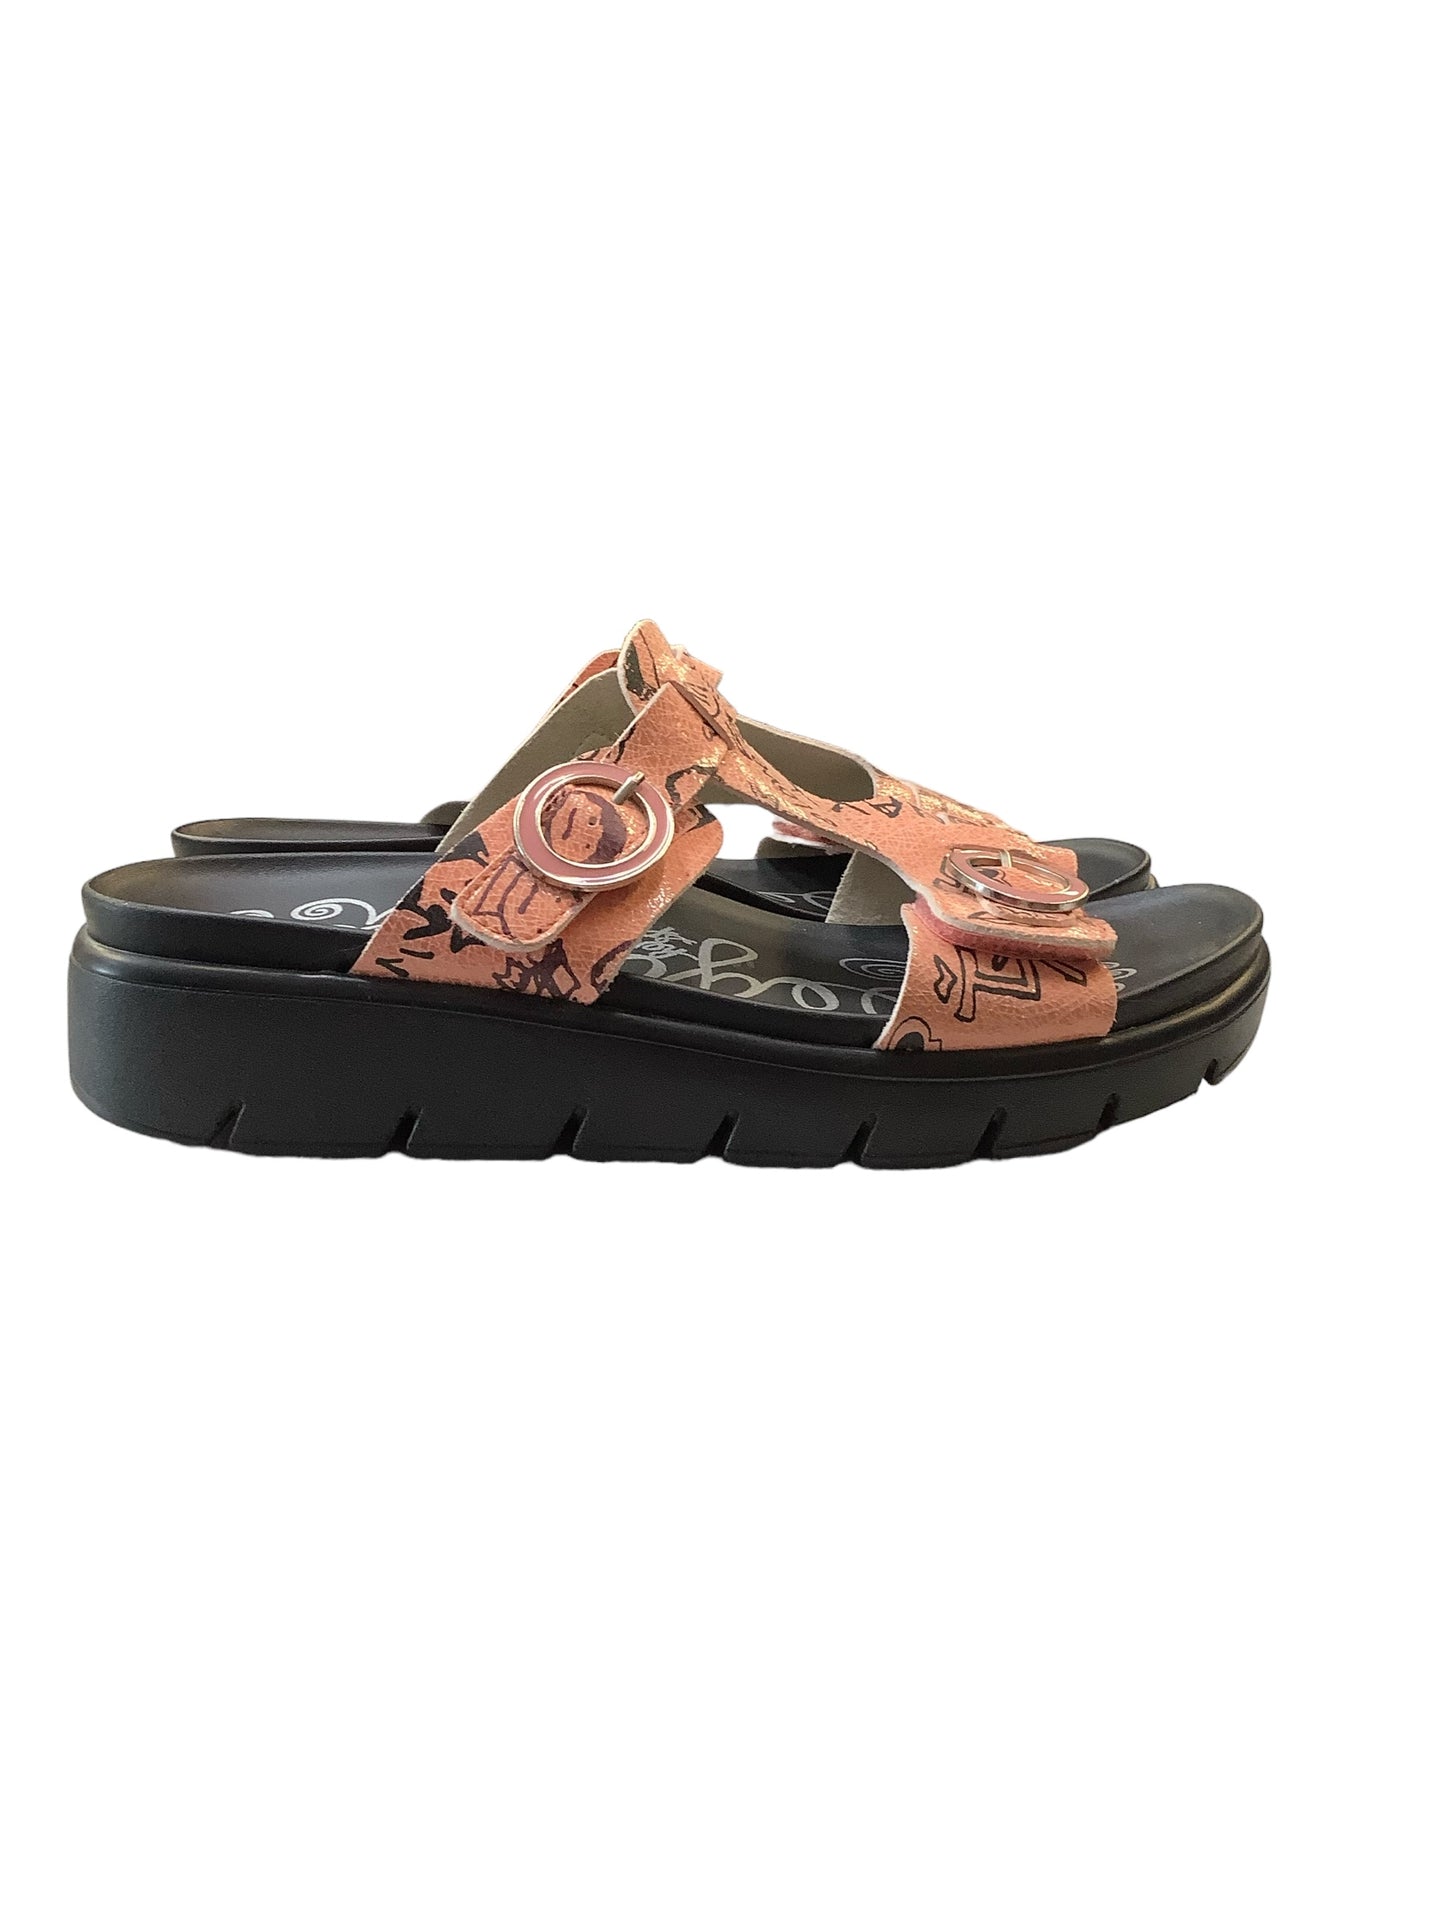 Sandals Flats By Allegra K  Size: 7.5